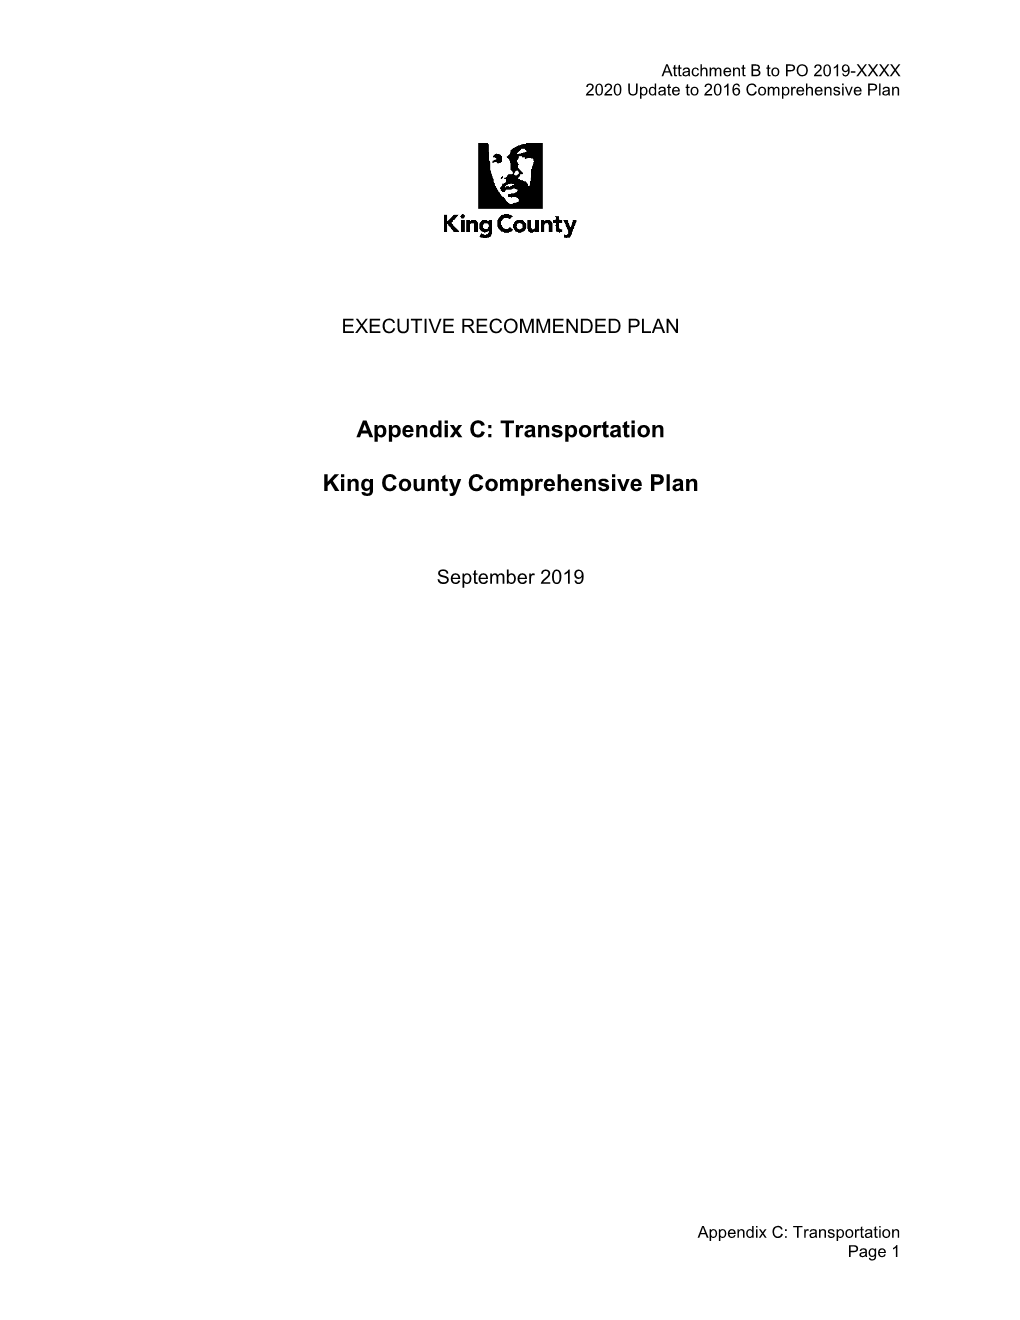 Appendix C: Transportation King County Comprehensive Plan